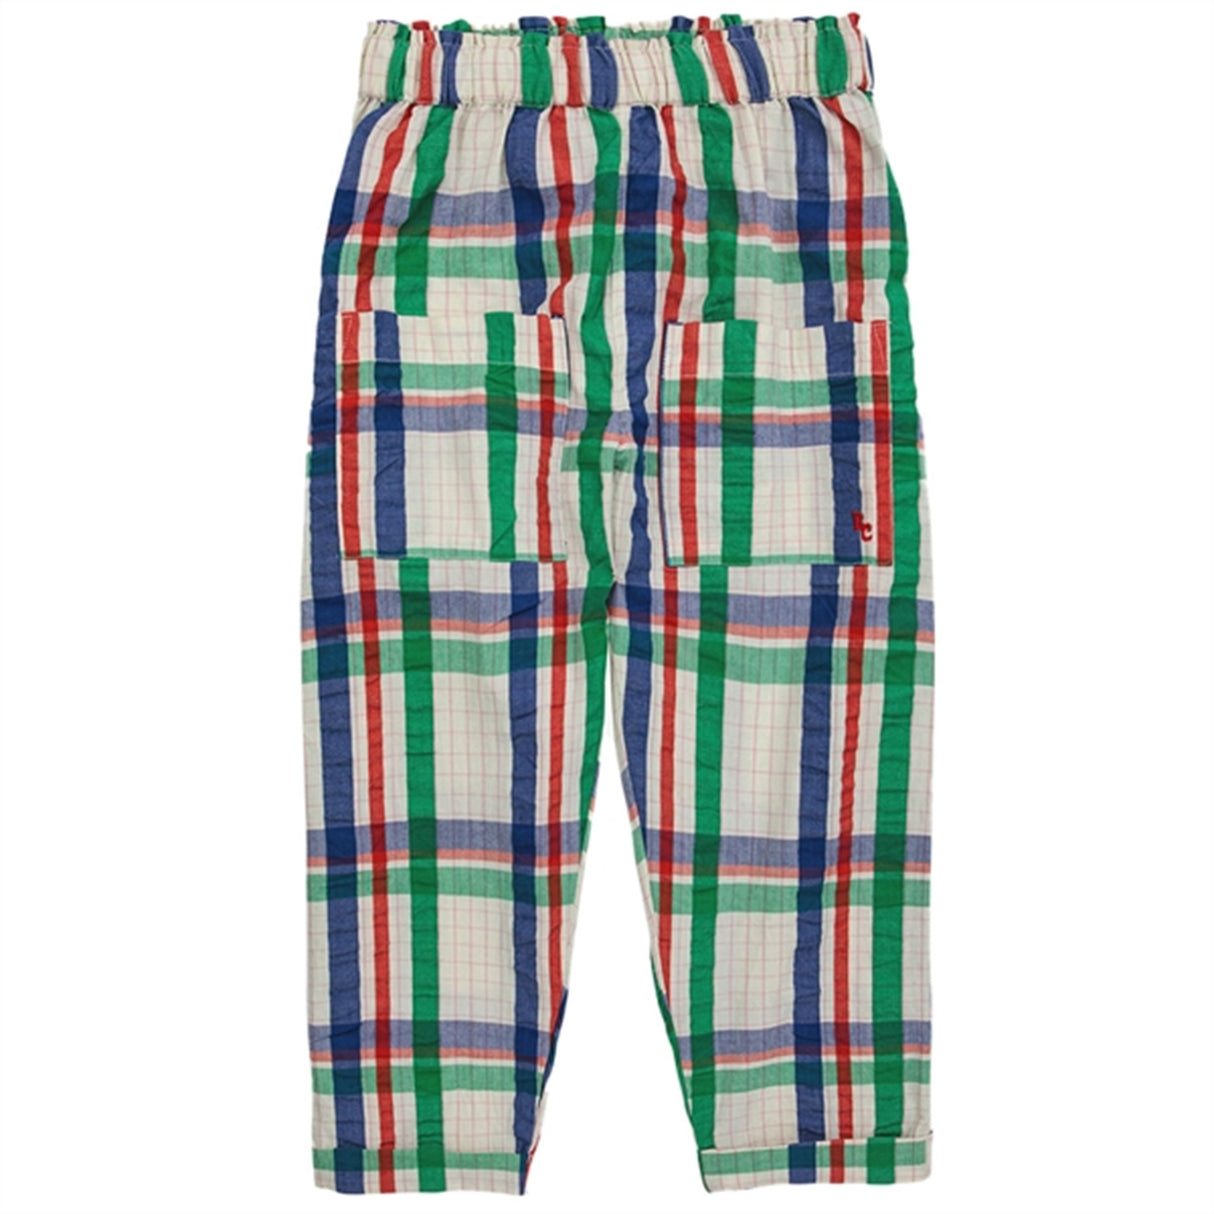 Bobo Choses Madras Checks Woven Pants Baggy Multicolor